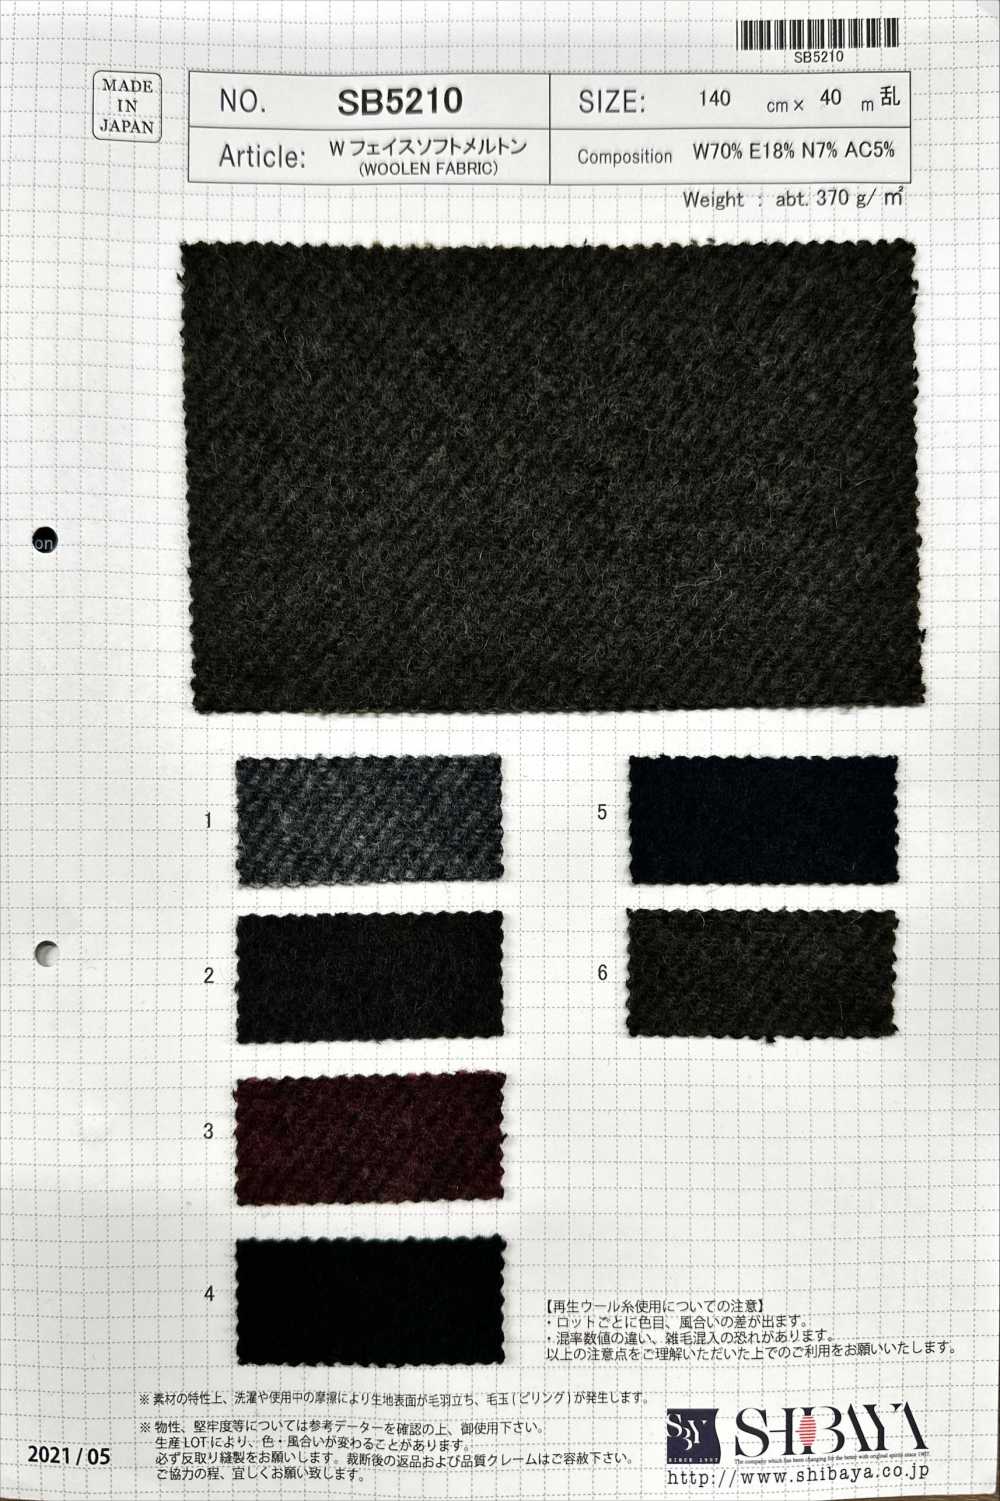 SB5210 W Face Soft Melton (TEJIDO DE LANA)[Fabrica Textil] SHIBAYA